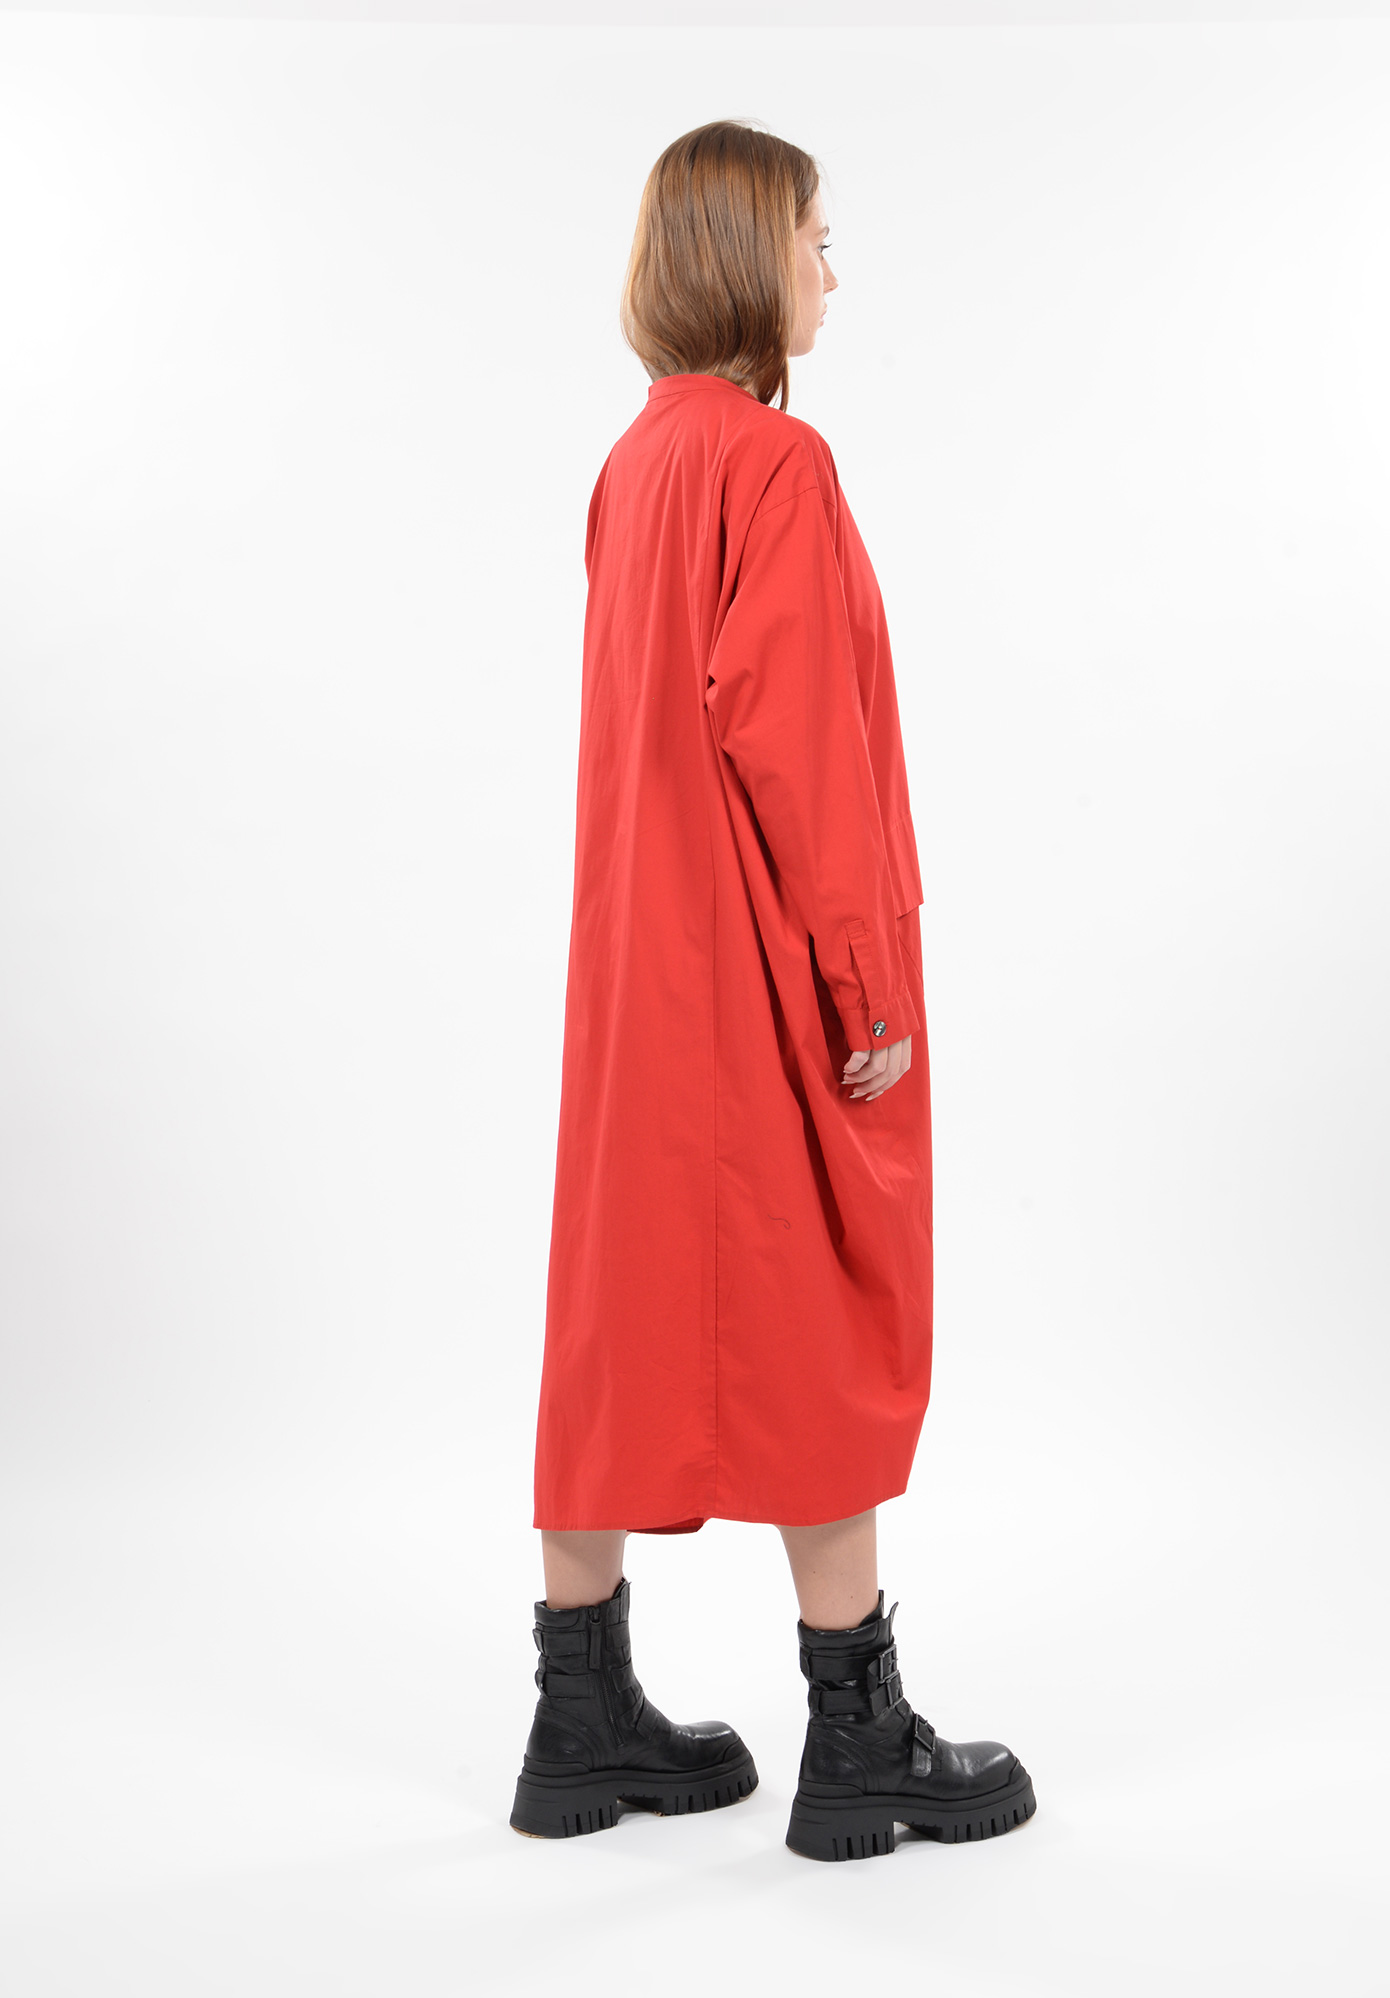 MOYURU - OVERSIZED COTTON DRESS - RED